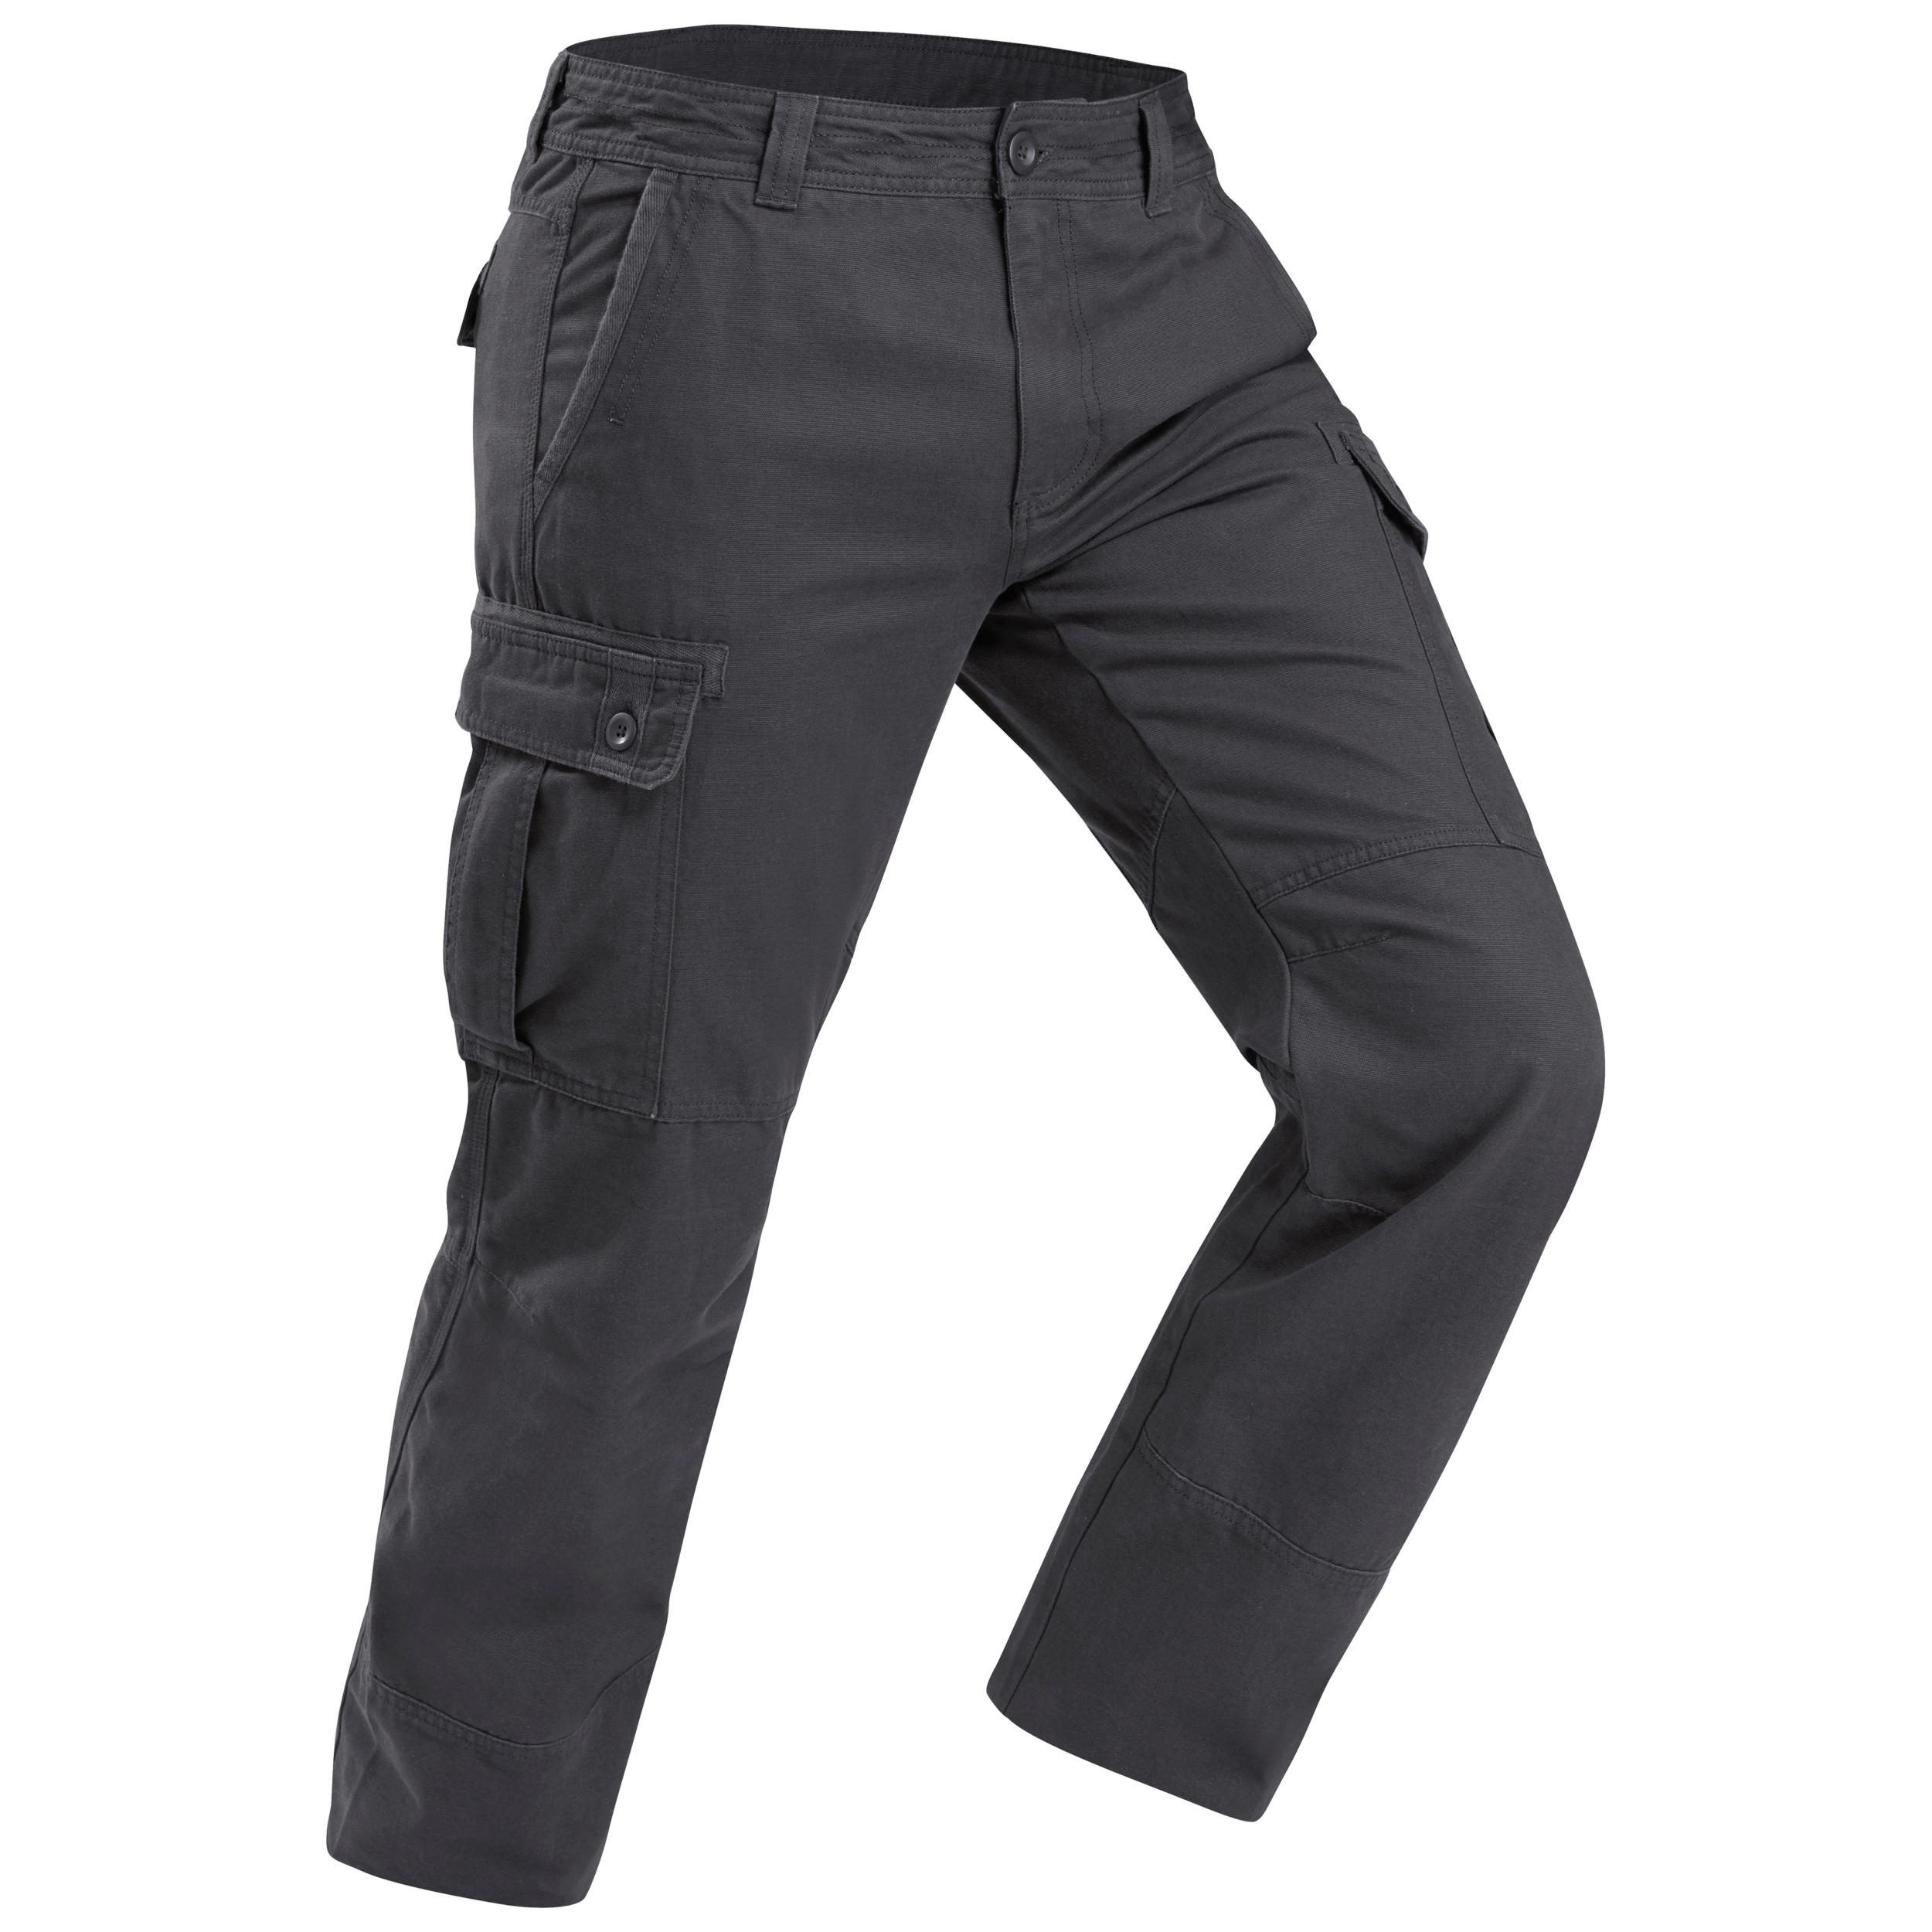 Decathlon Mens Cargo Pants Solognac Steppe Trousers 300 Green Size M  Gorpcore | eBay